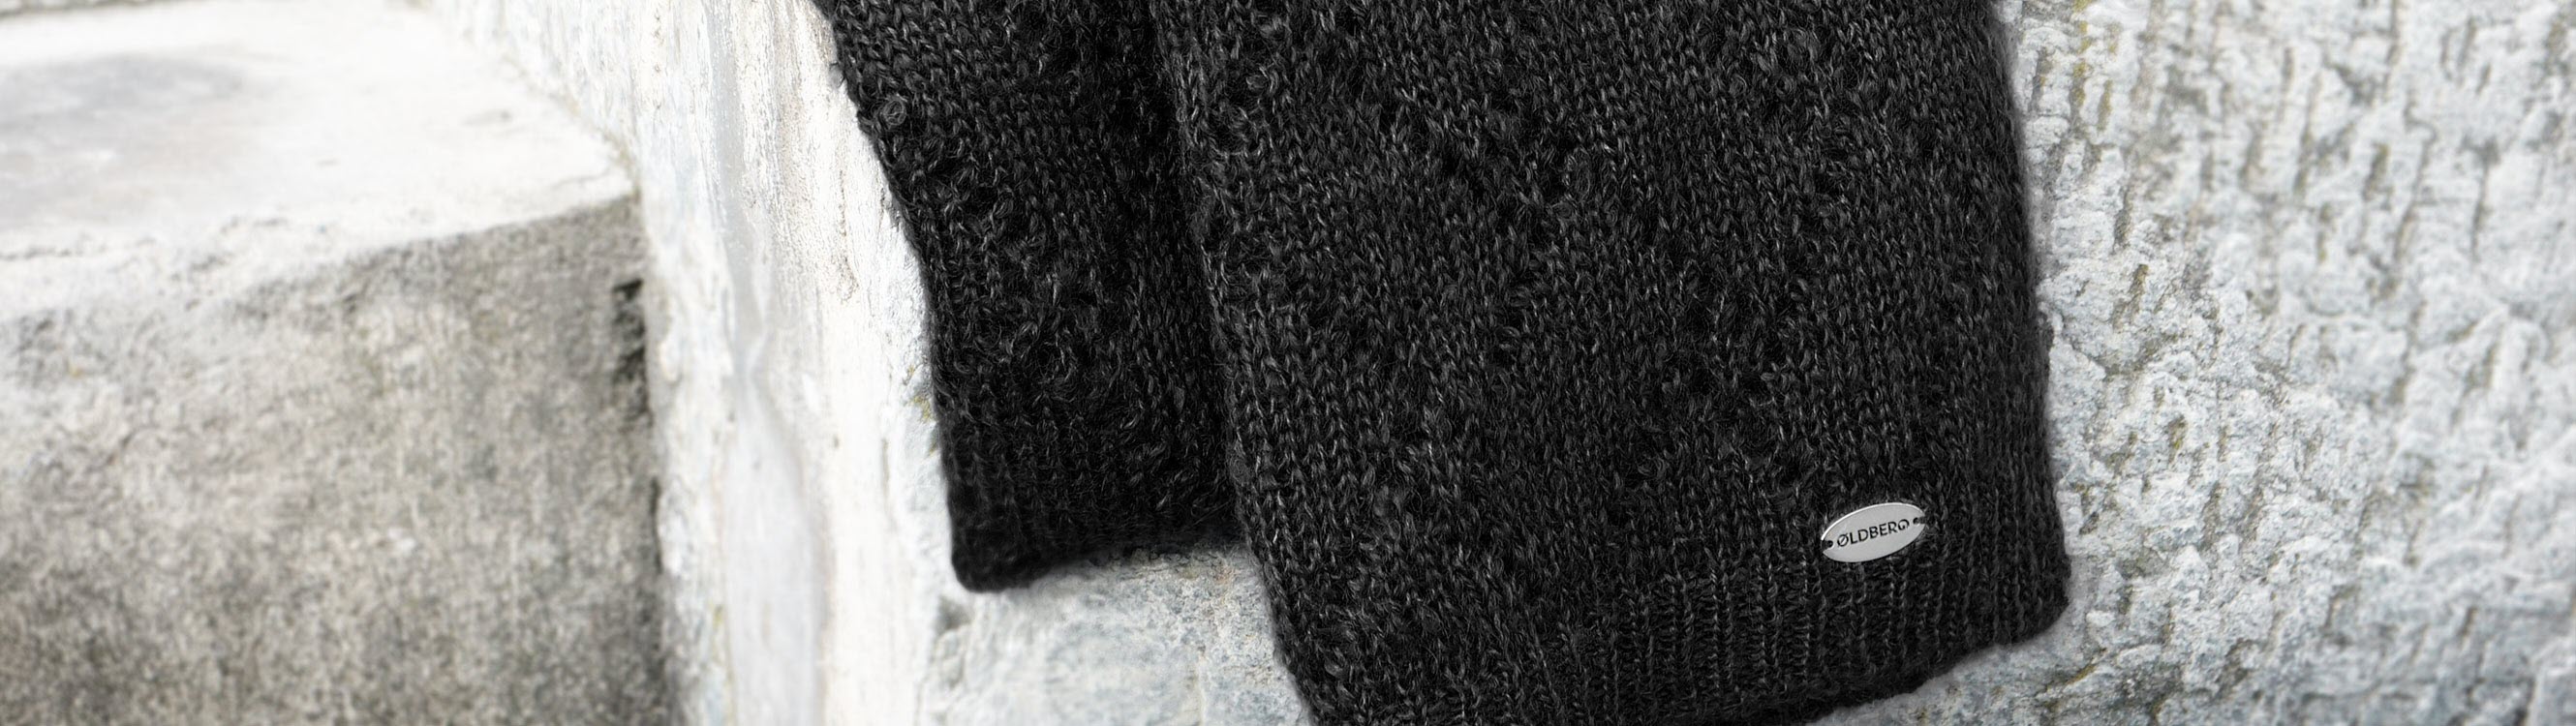 lana fibre pregiate